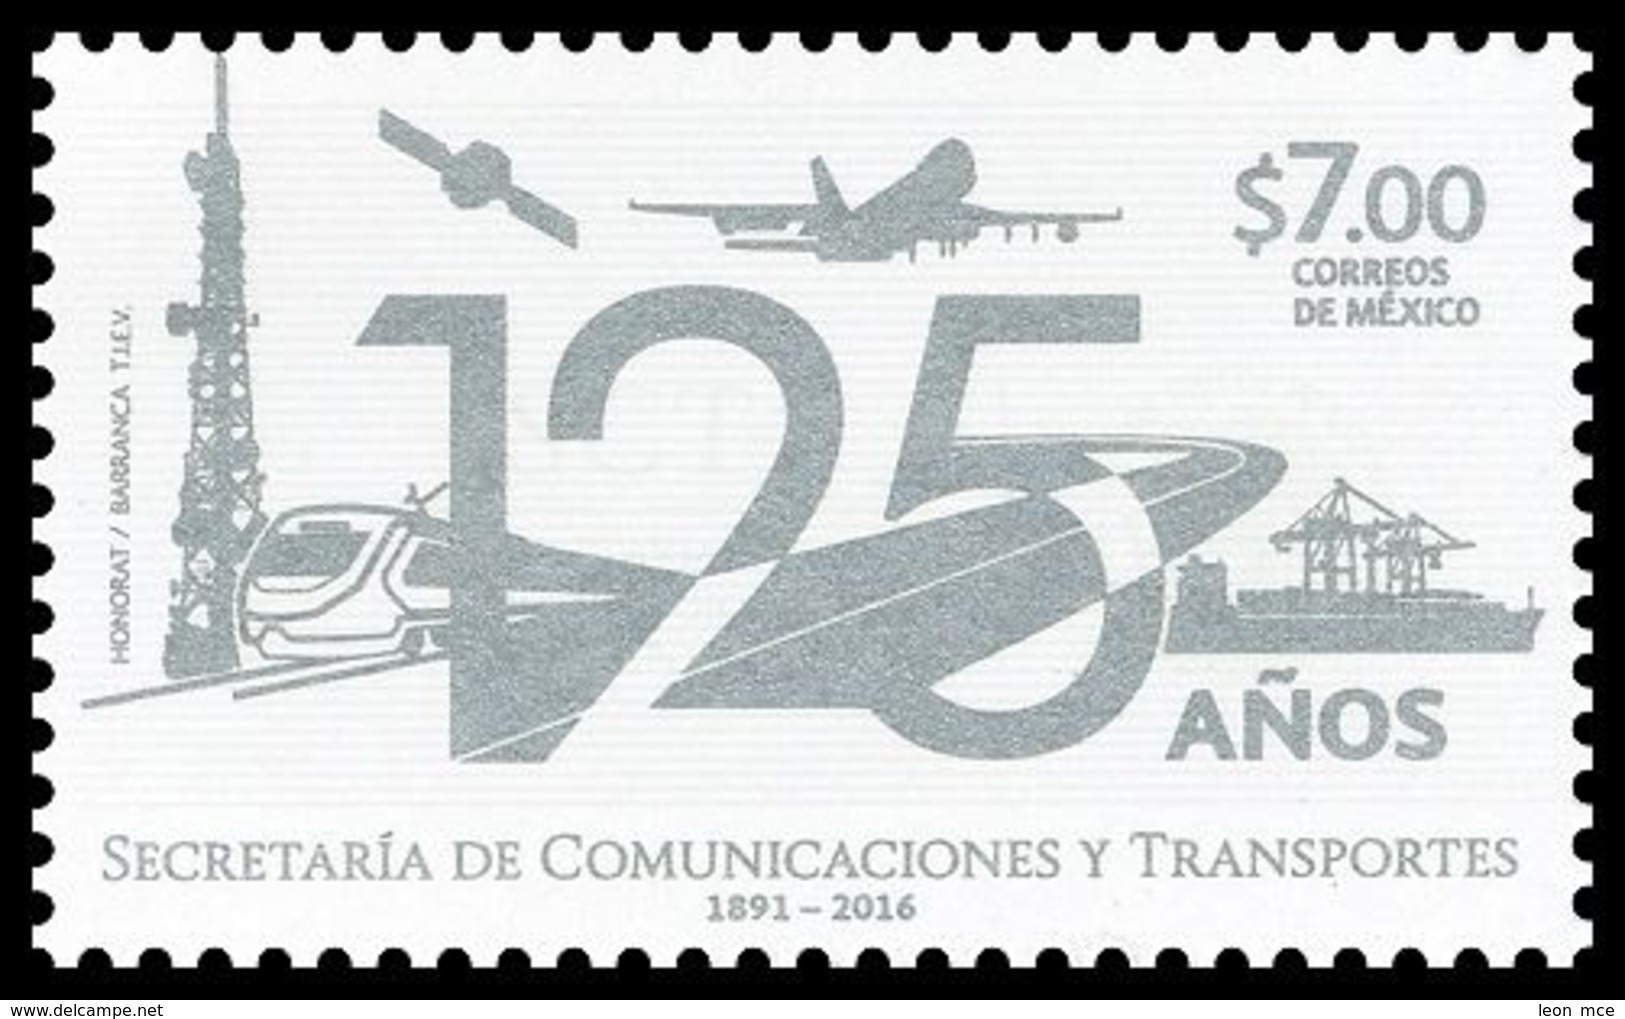 2016 MÉXICO Secretaría De Comunicaciones Y Transportes MNH COMUNICATIONS AND TRANSPORTATIONS, CONTROL TOWER, TRAIN - Mexique